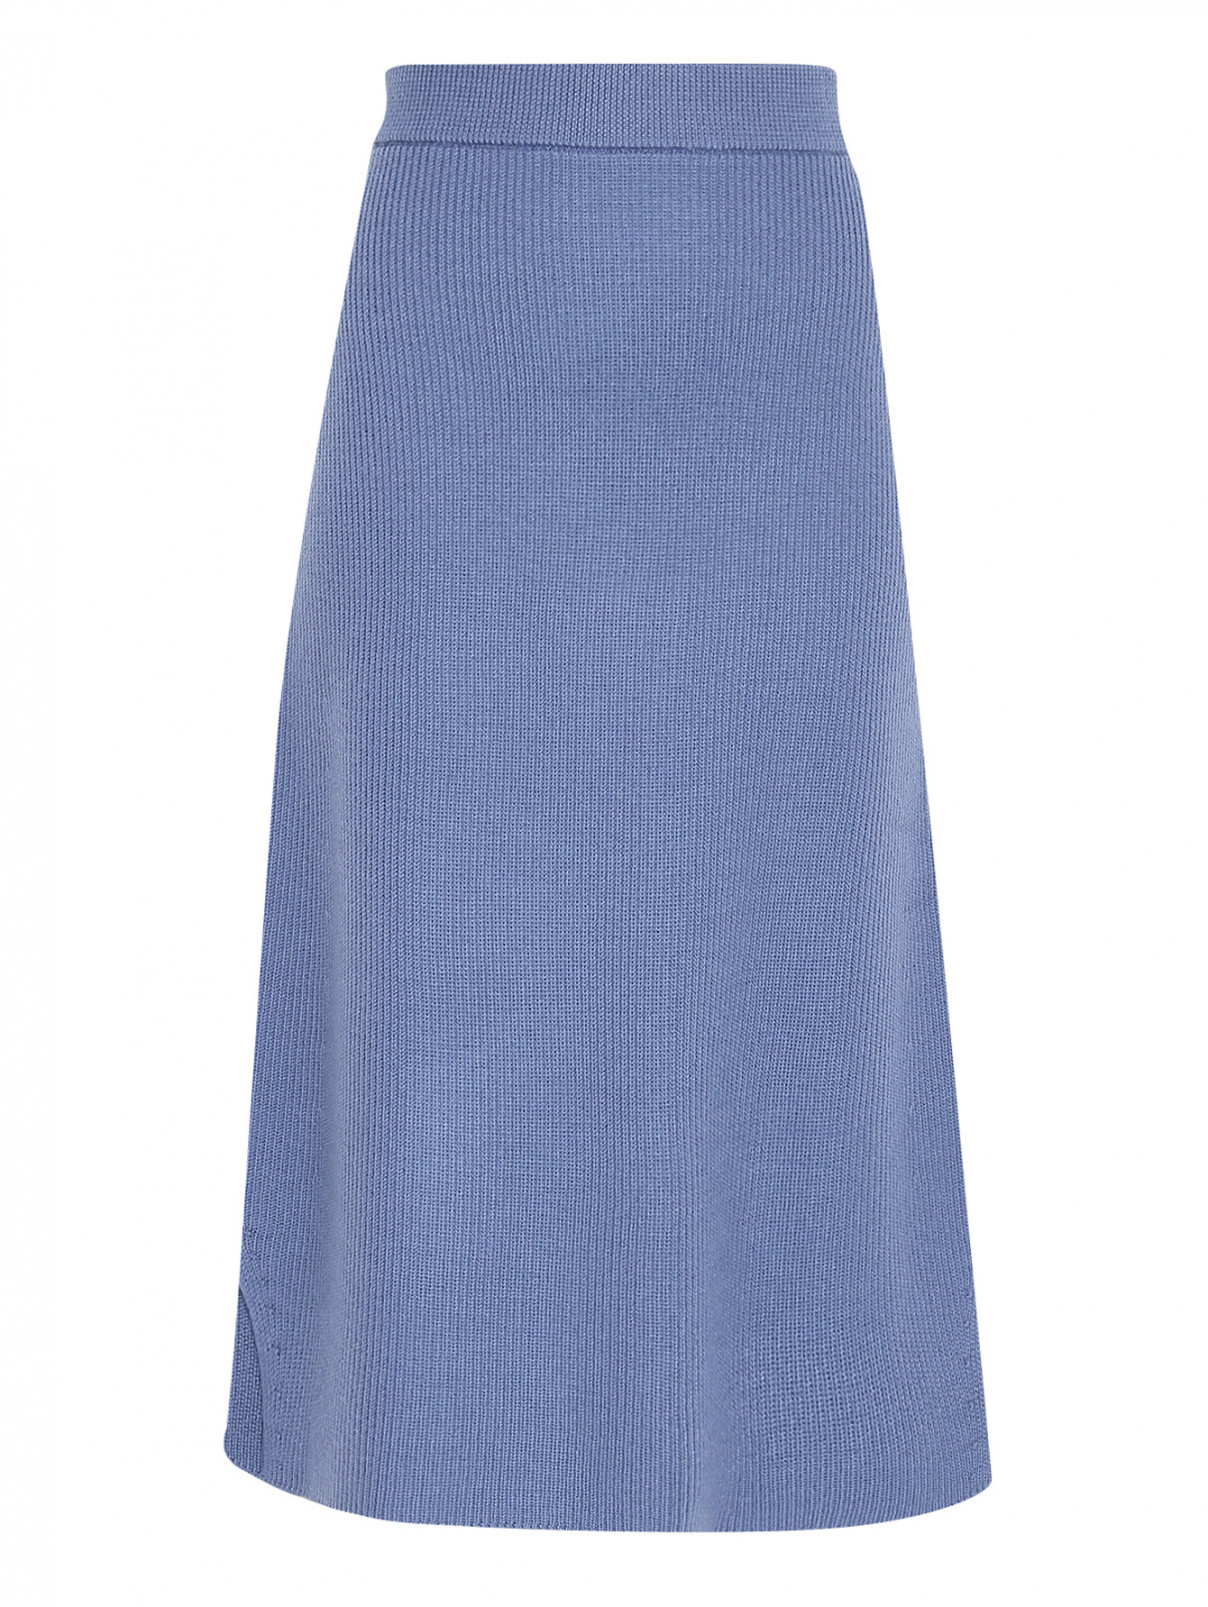 Трикотажная юбка на резинке с разрезами Max Mara  –  Общий вид  – Цвет:  Синий